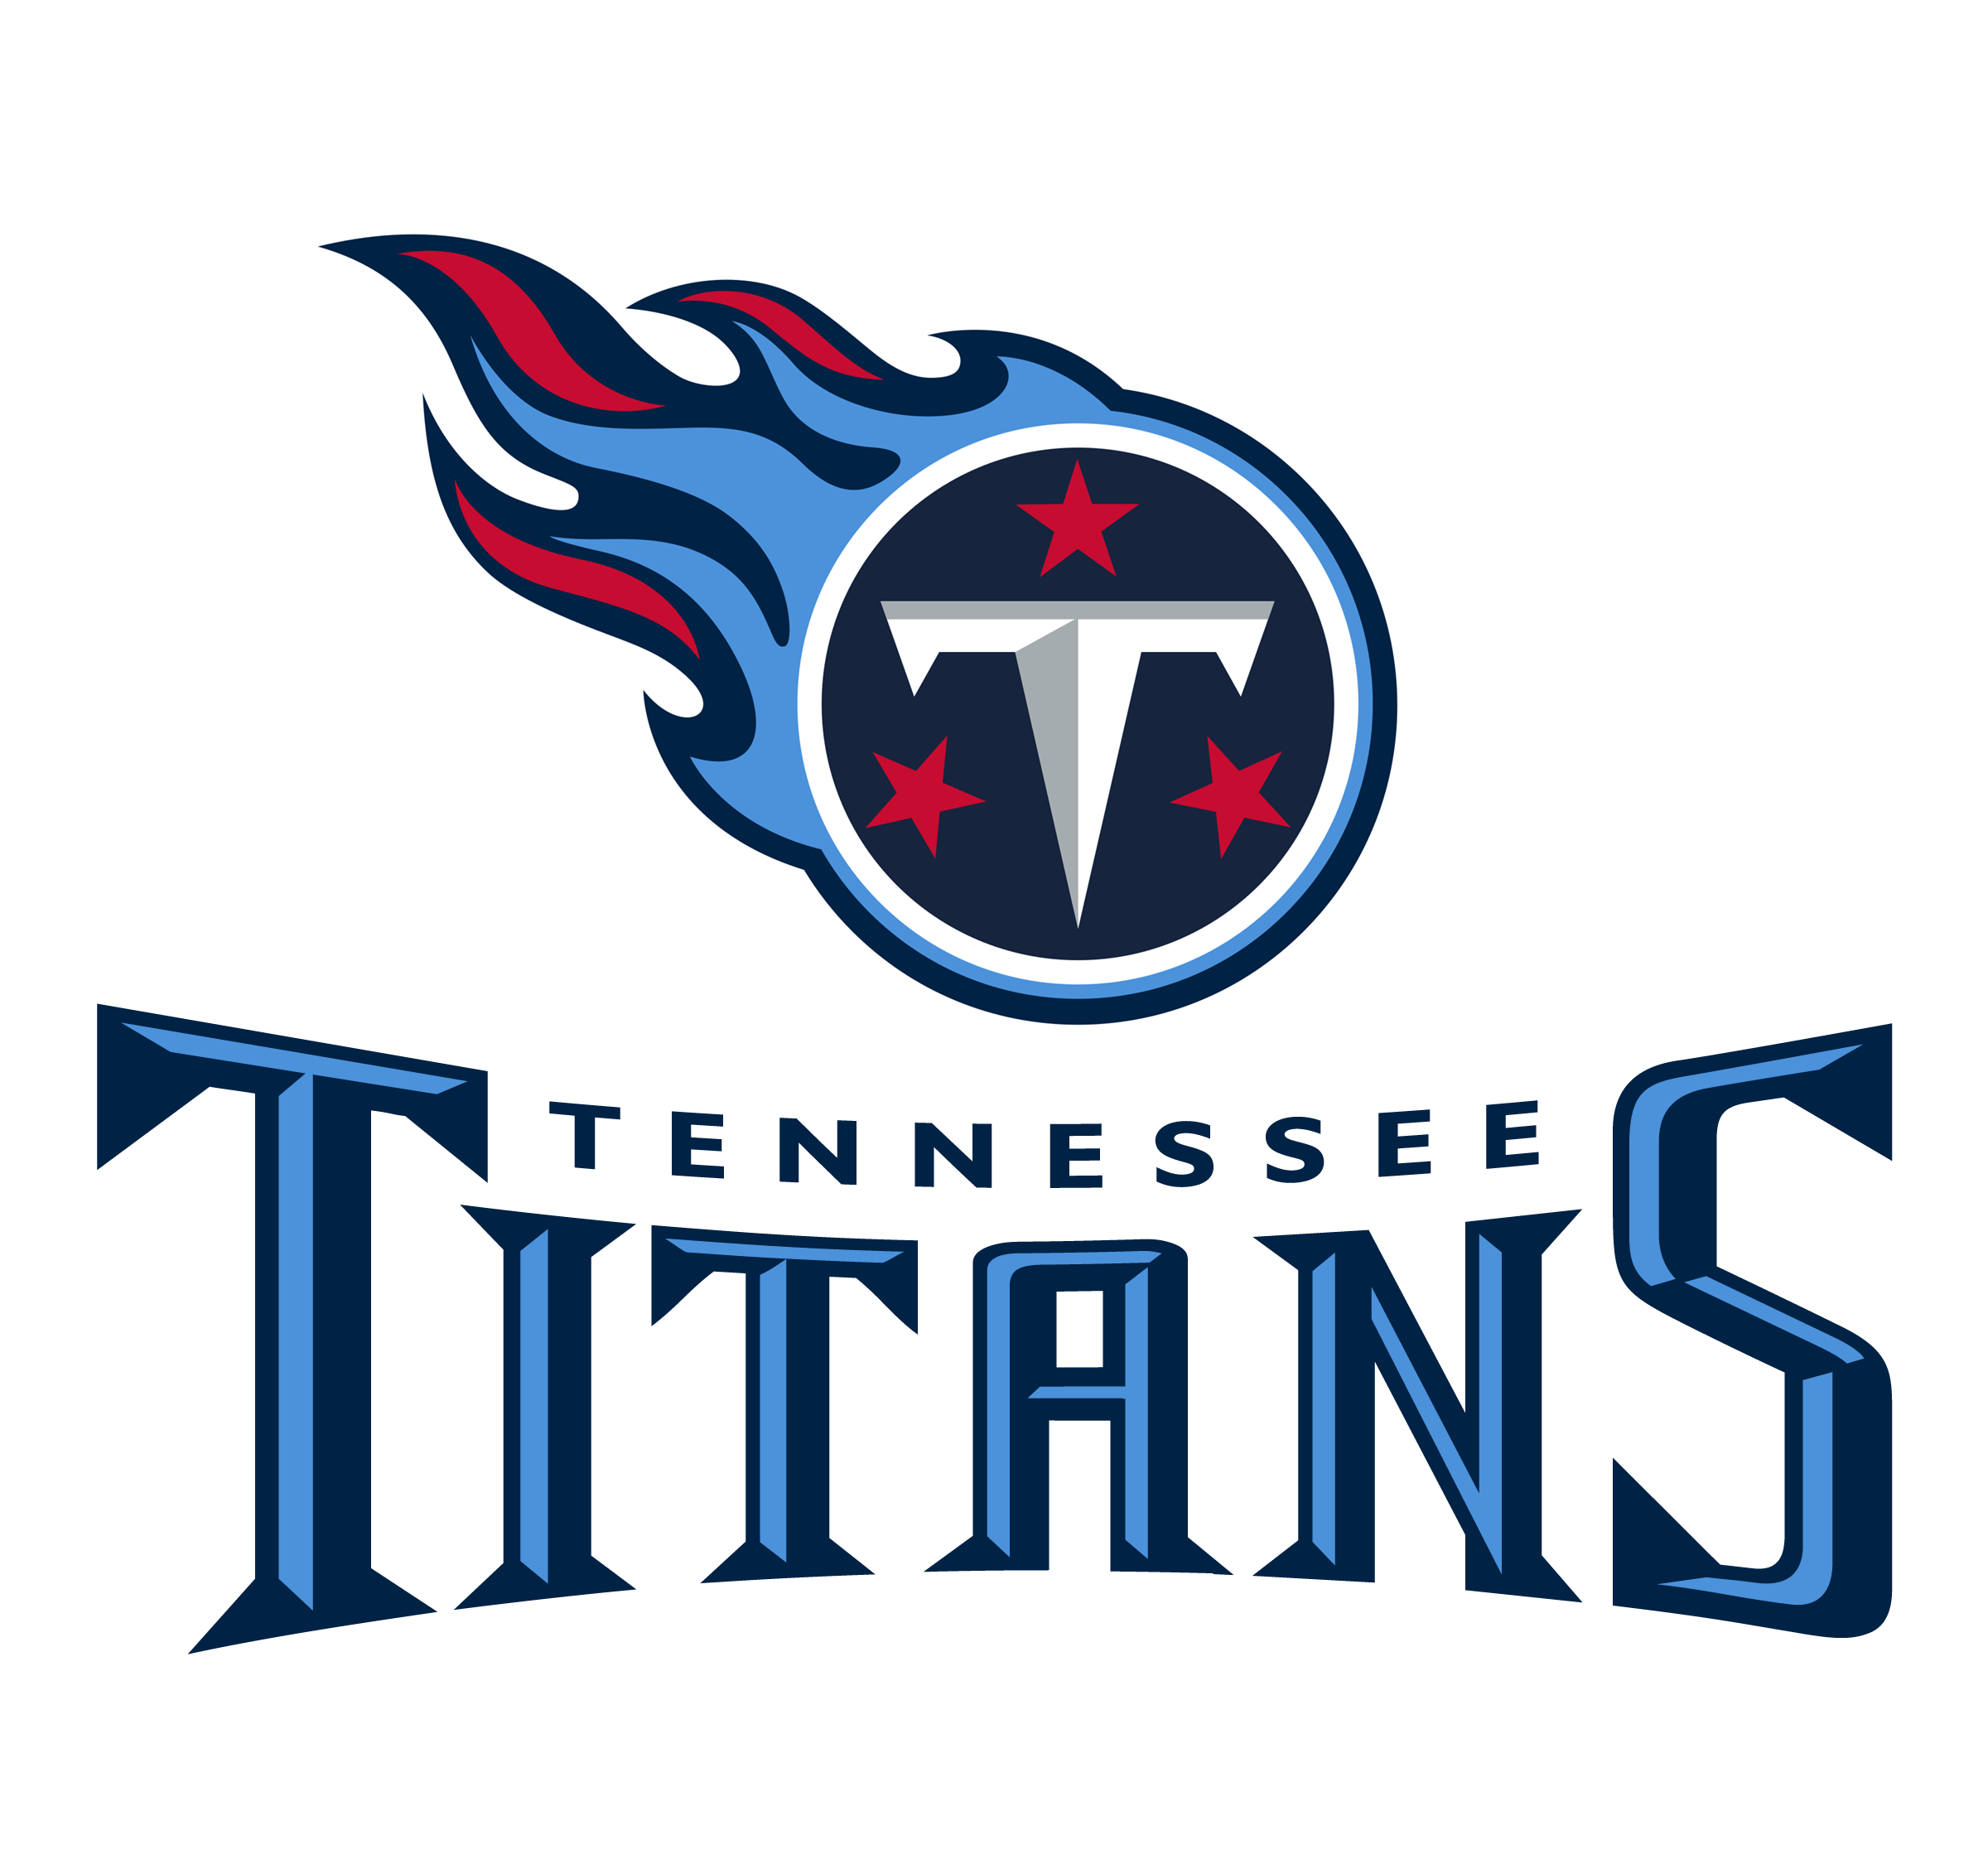 Tennessee Titans logo transpa